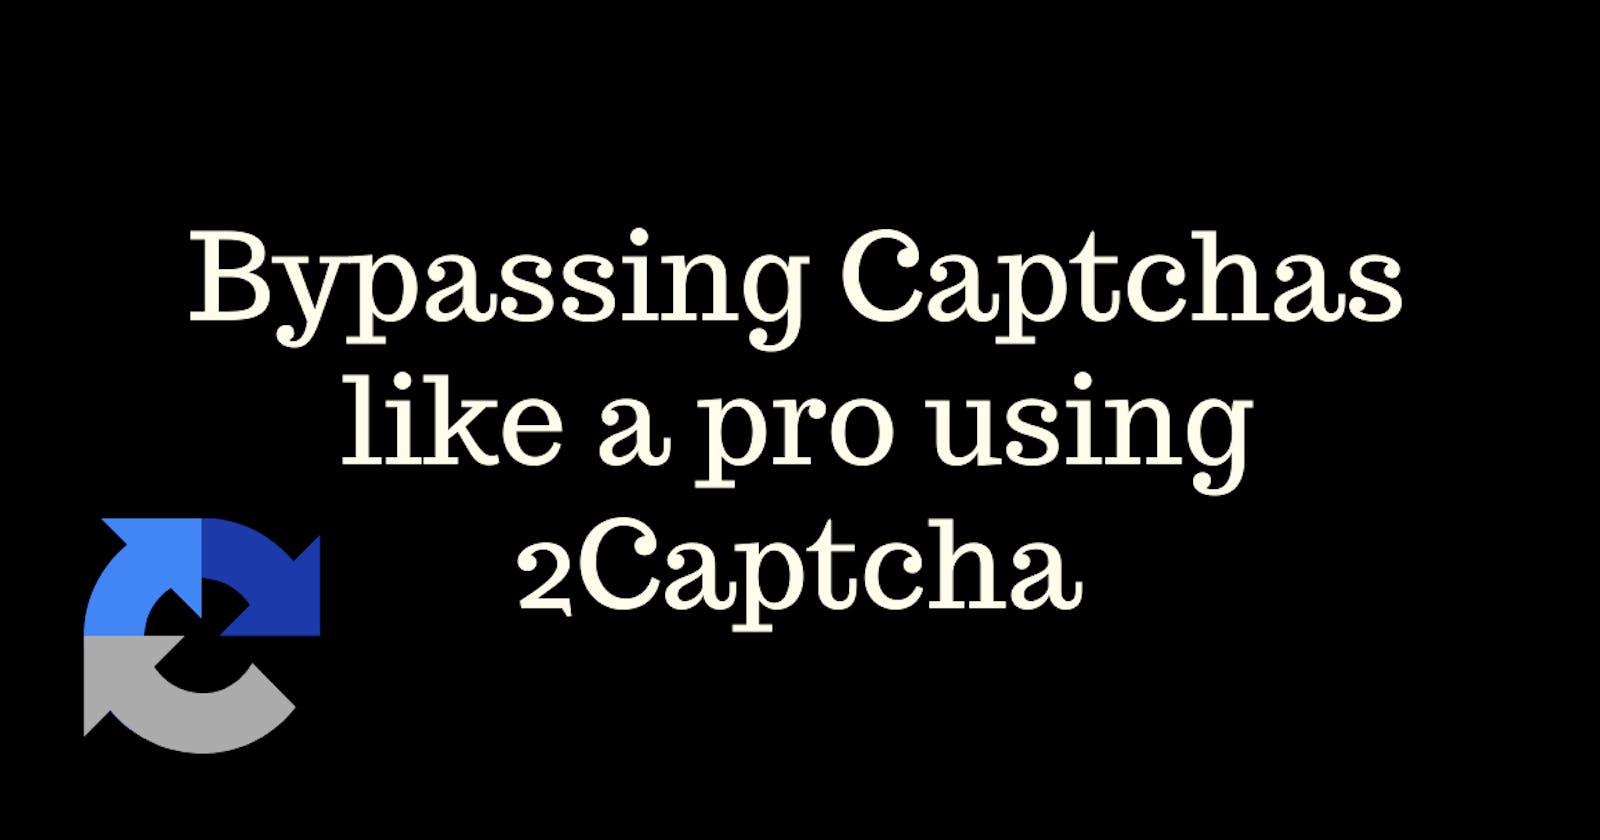 Bypassing Captchas like a pro using 2Captcha